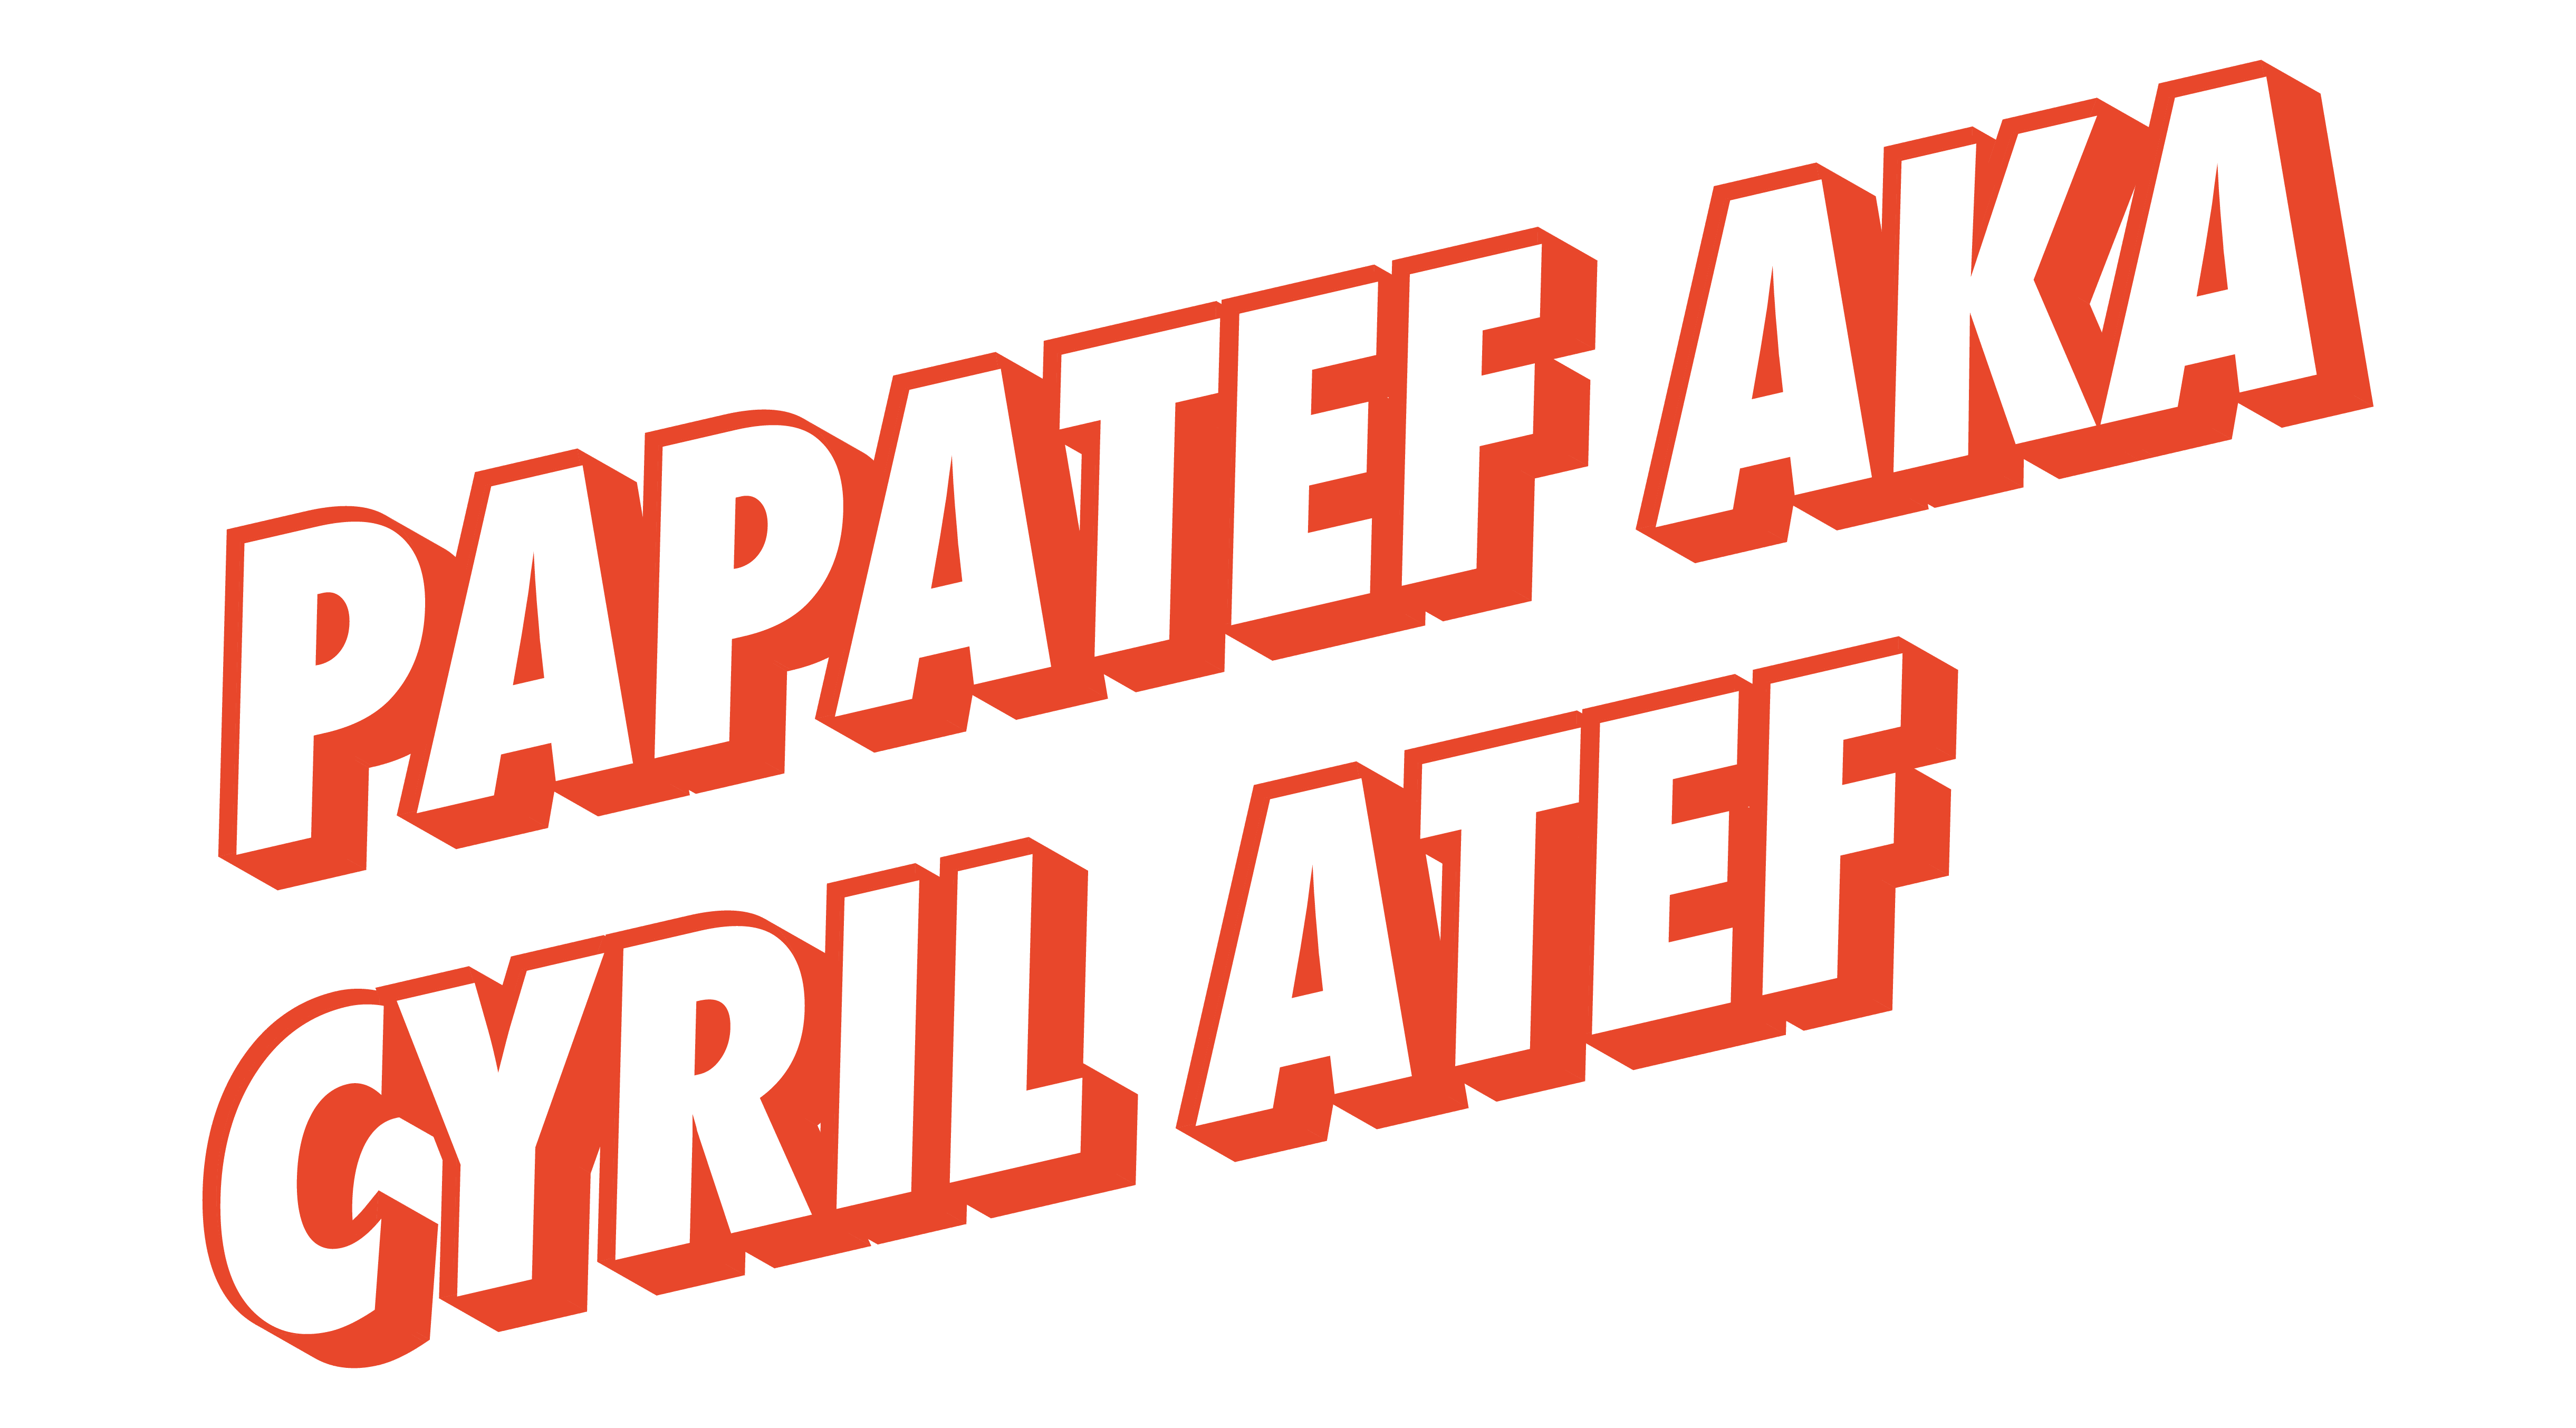 Papatef aka Cyril Atef